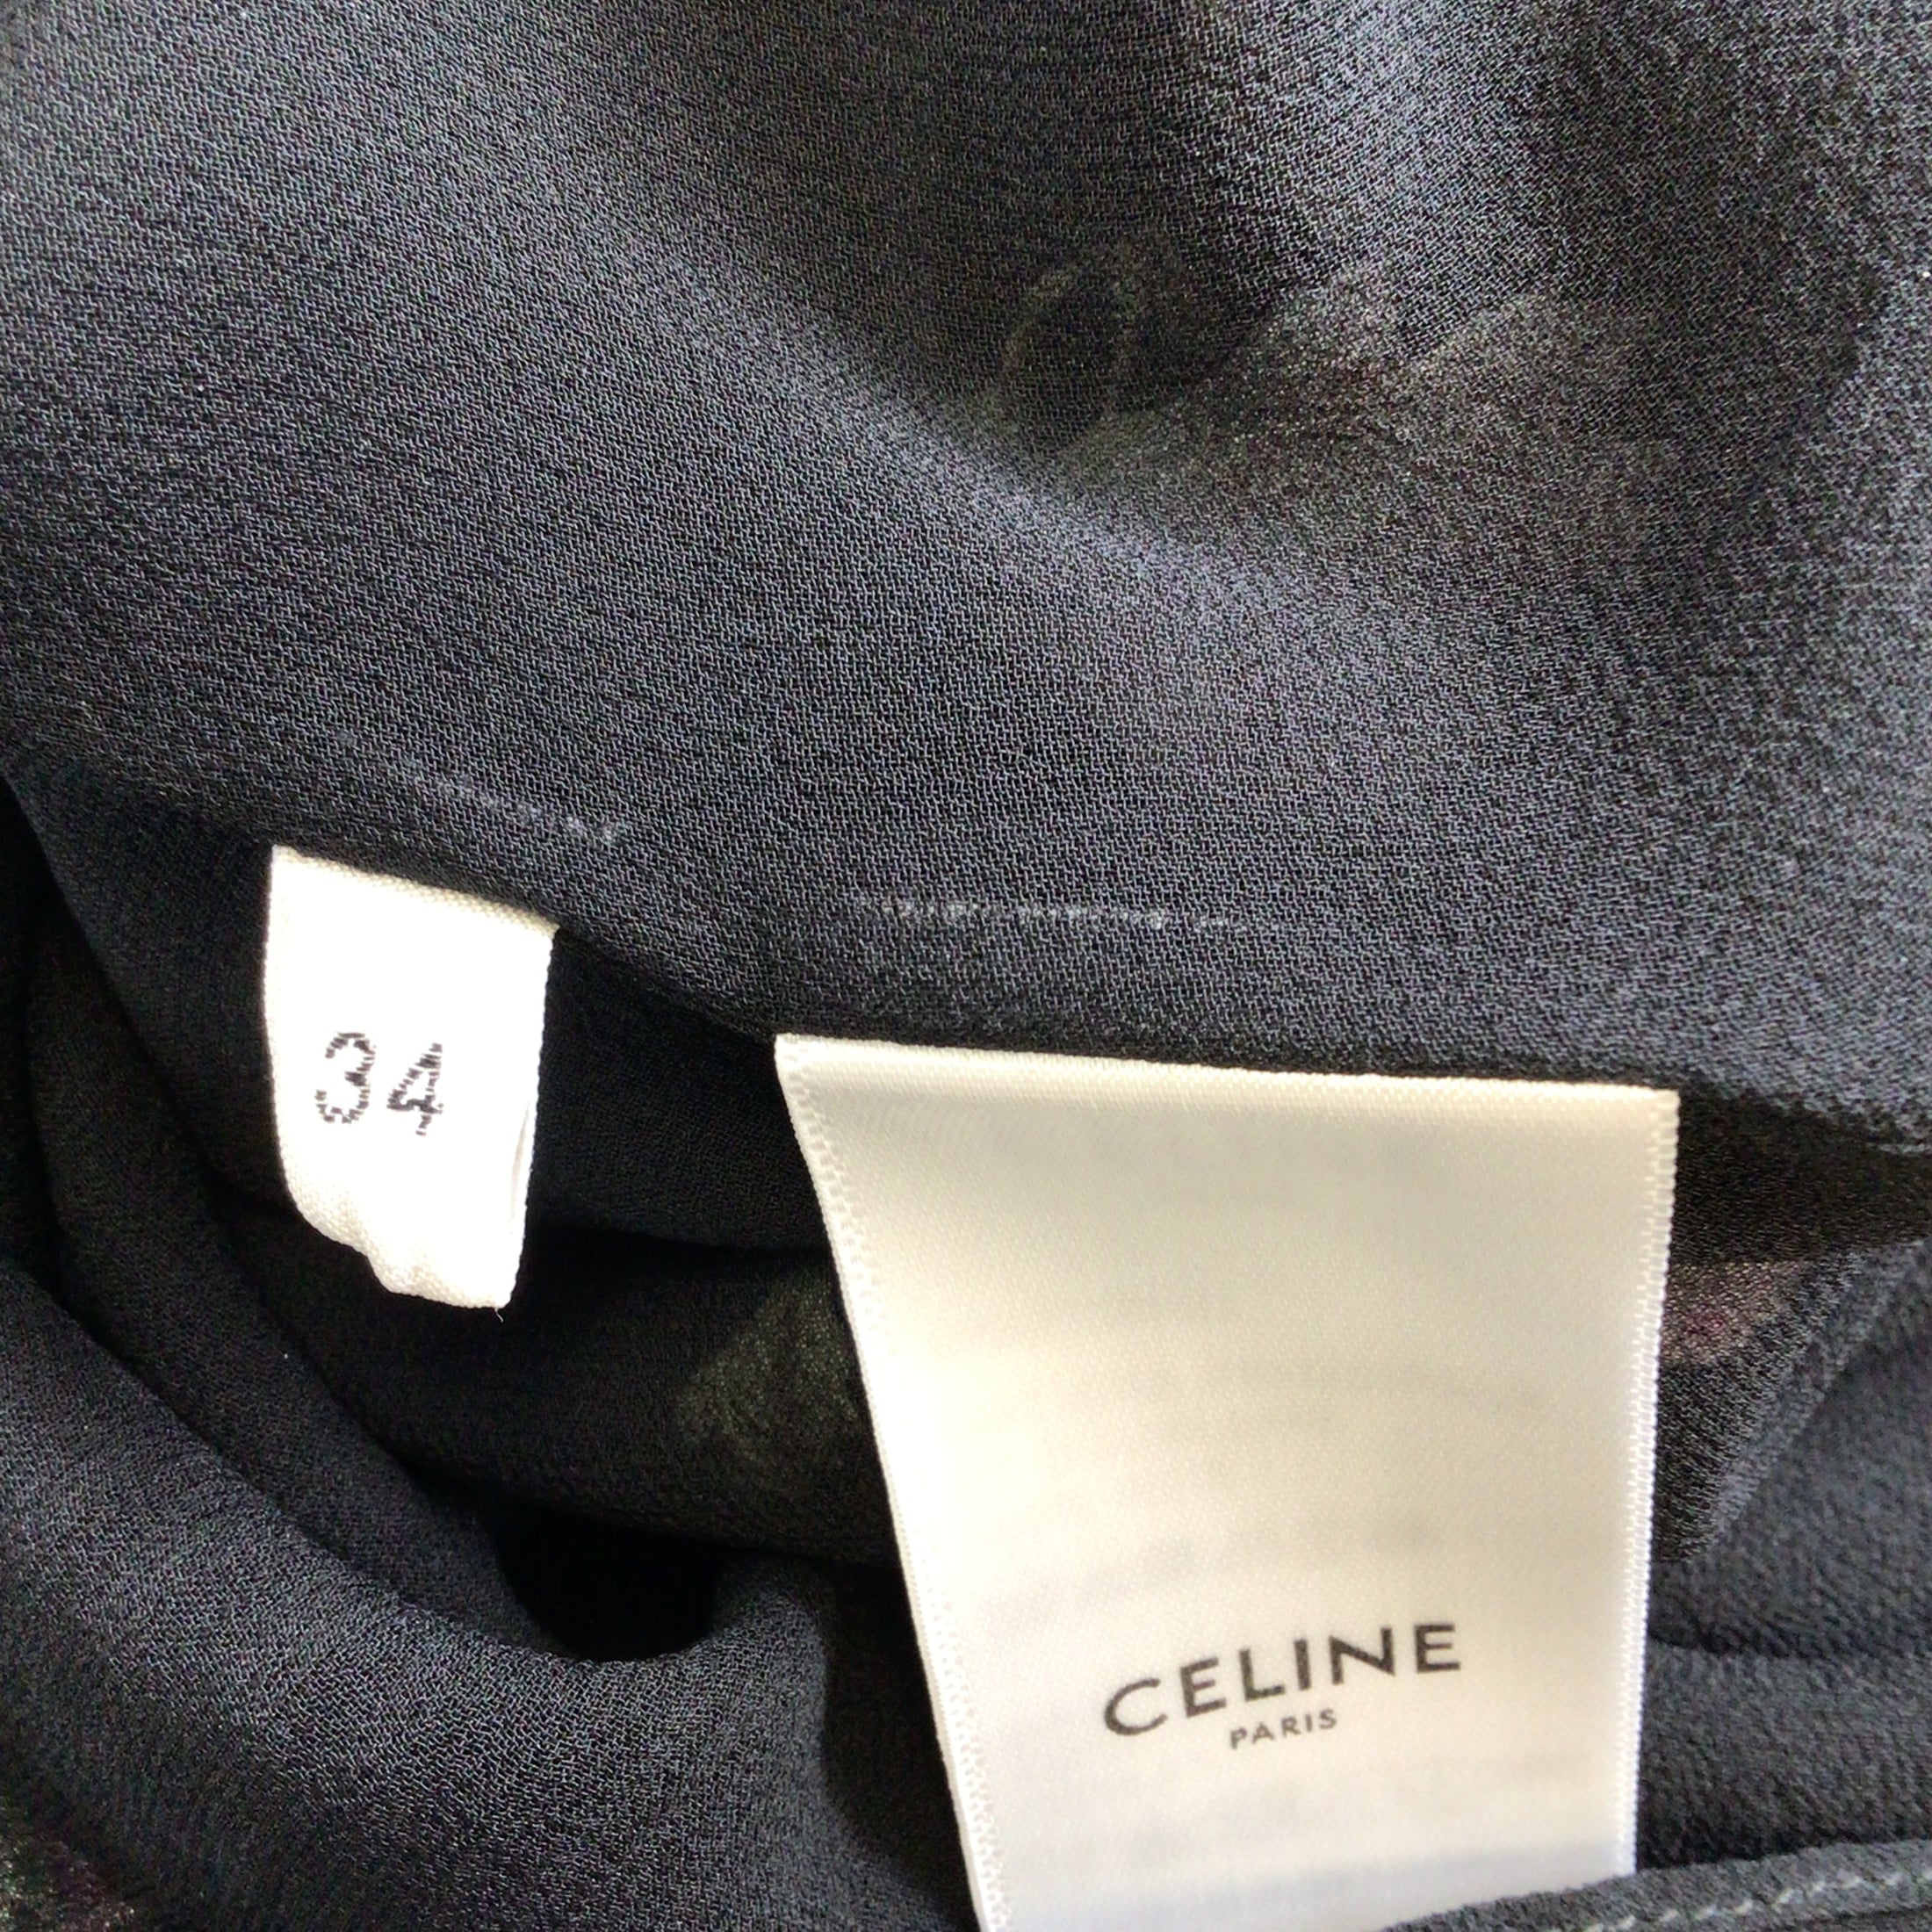 Celine Black Multi Floral Printed Long Sleeved Silk Midi Dress